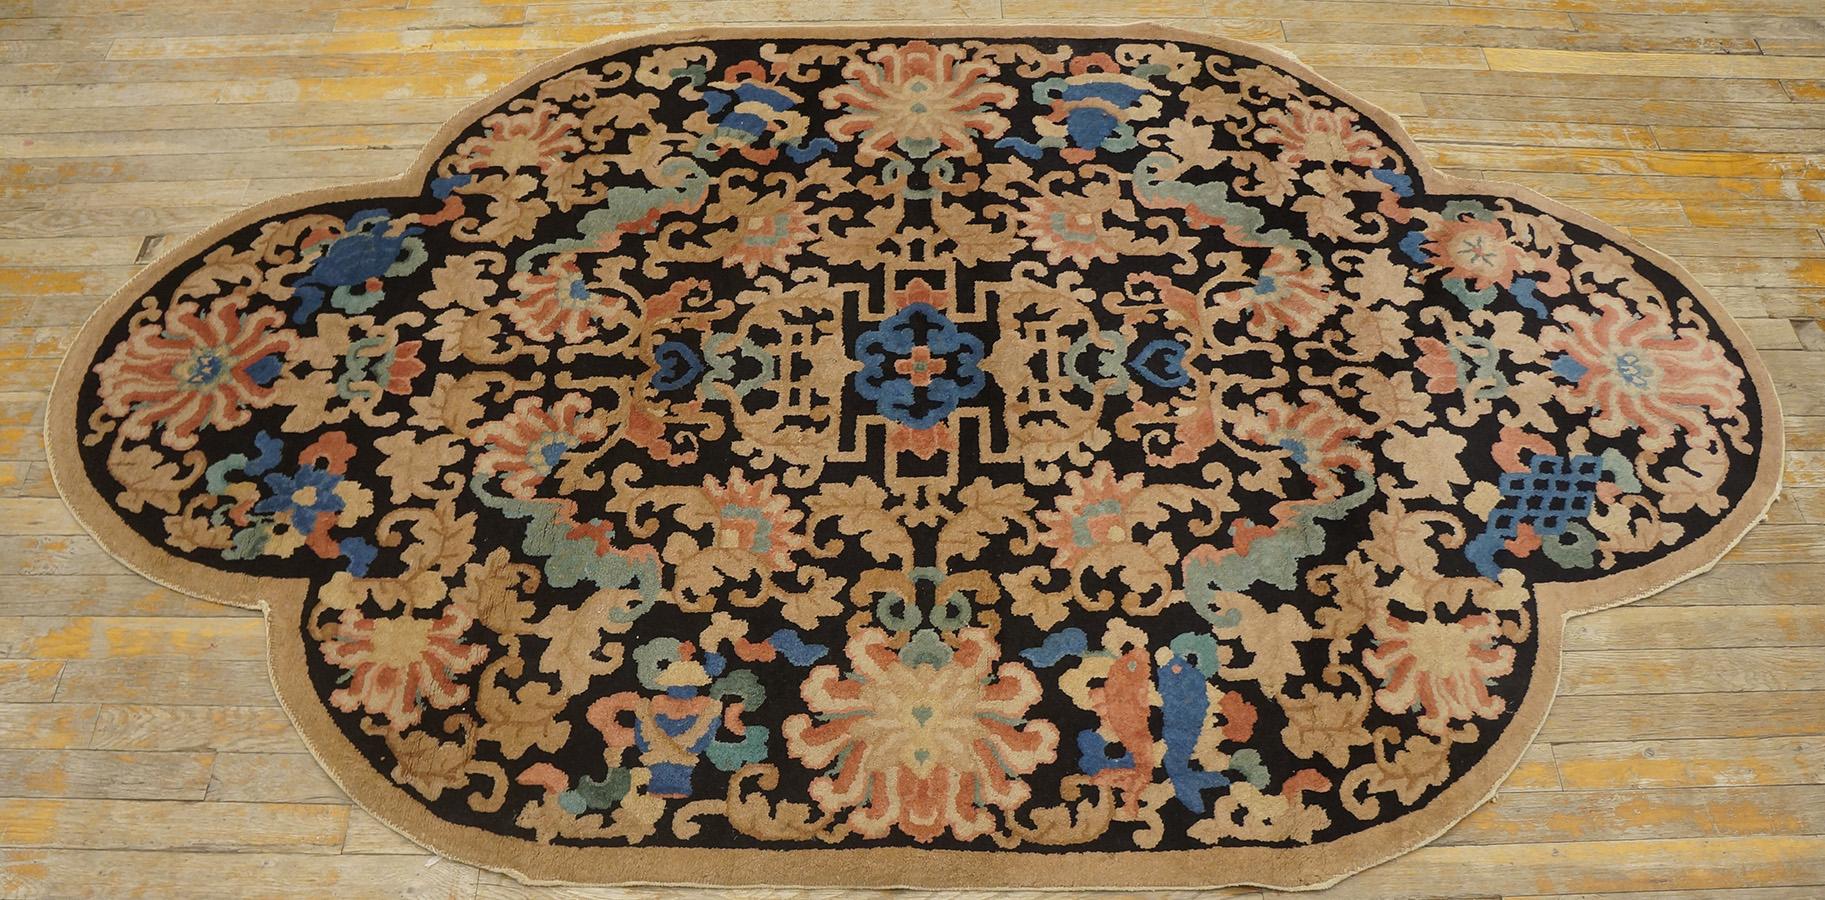 1920s Chinese Art Deco Carpet by Fetti - Li Workshop (4' 6''x 7' 6''-137 x 228) For Sale 7